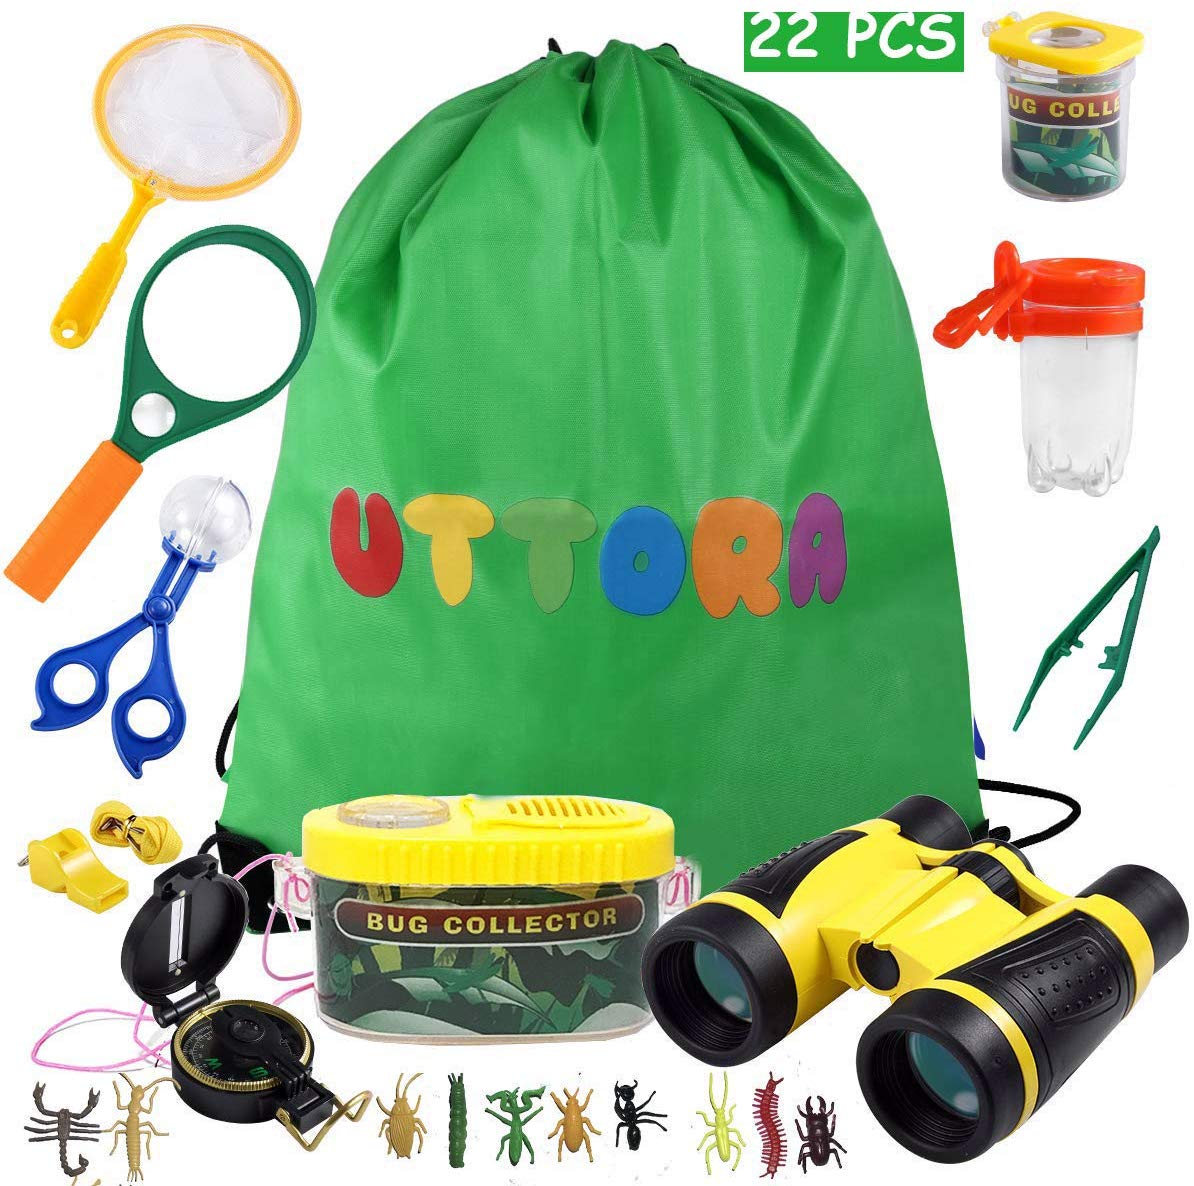 Kids Binoculars Set with Compass UTTORA Outdoor Explorer Kit Magnifying Glass, 